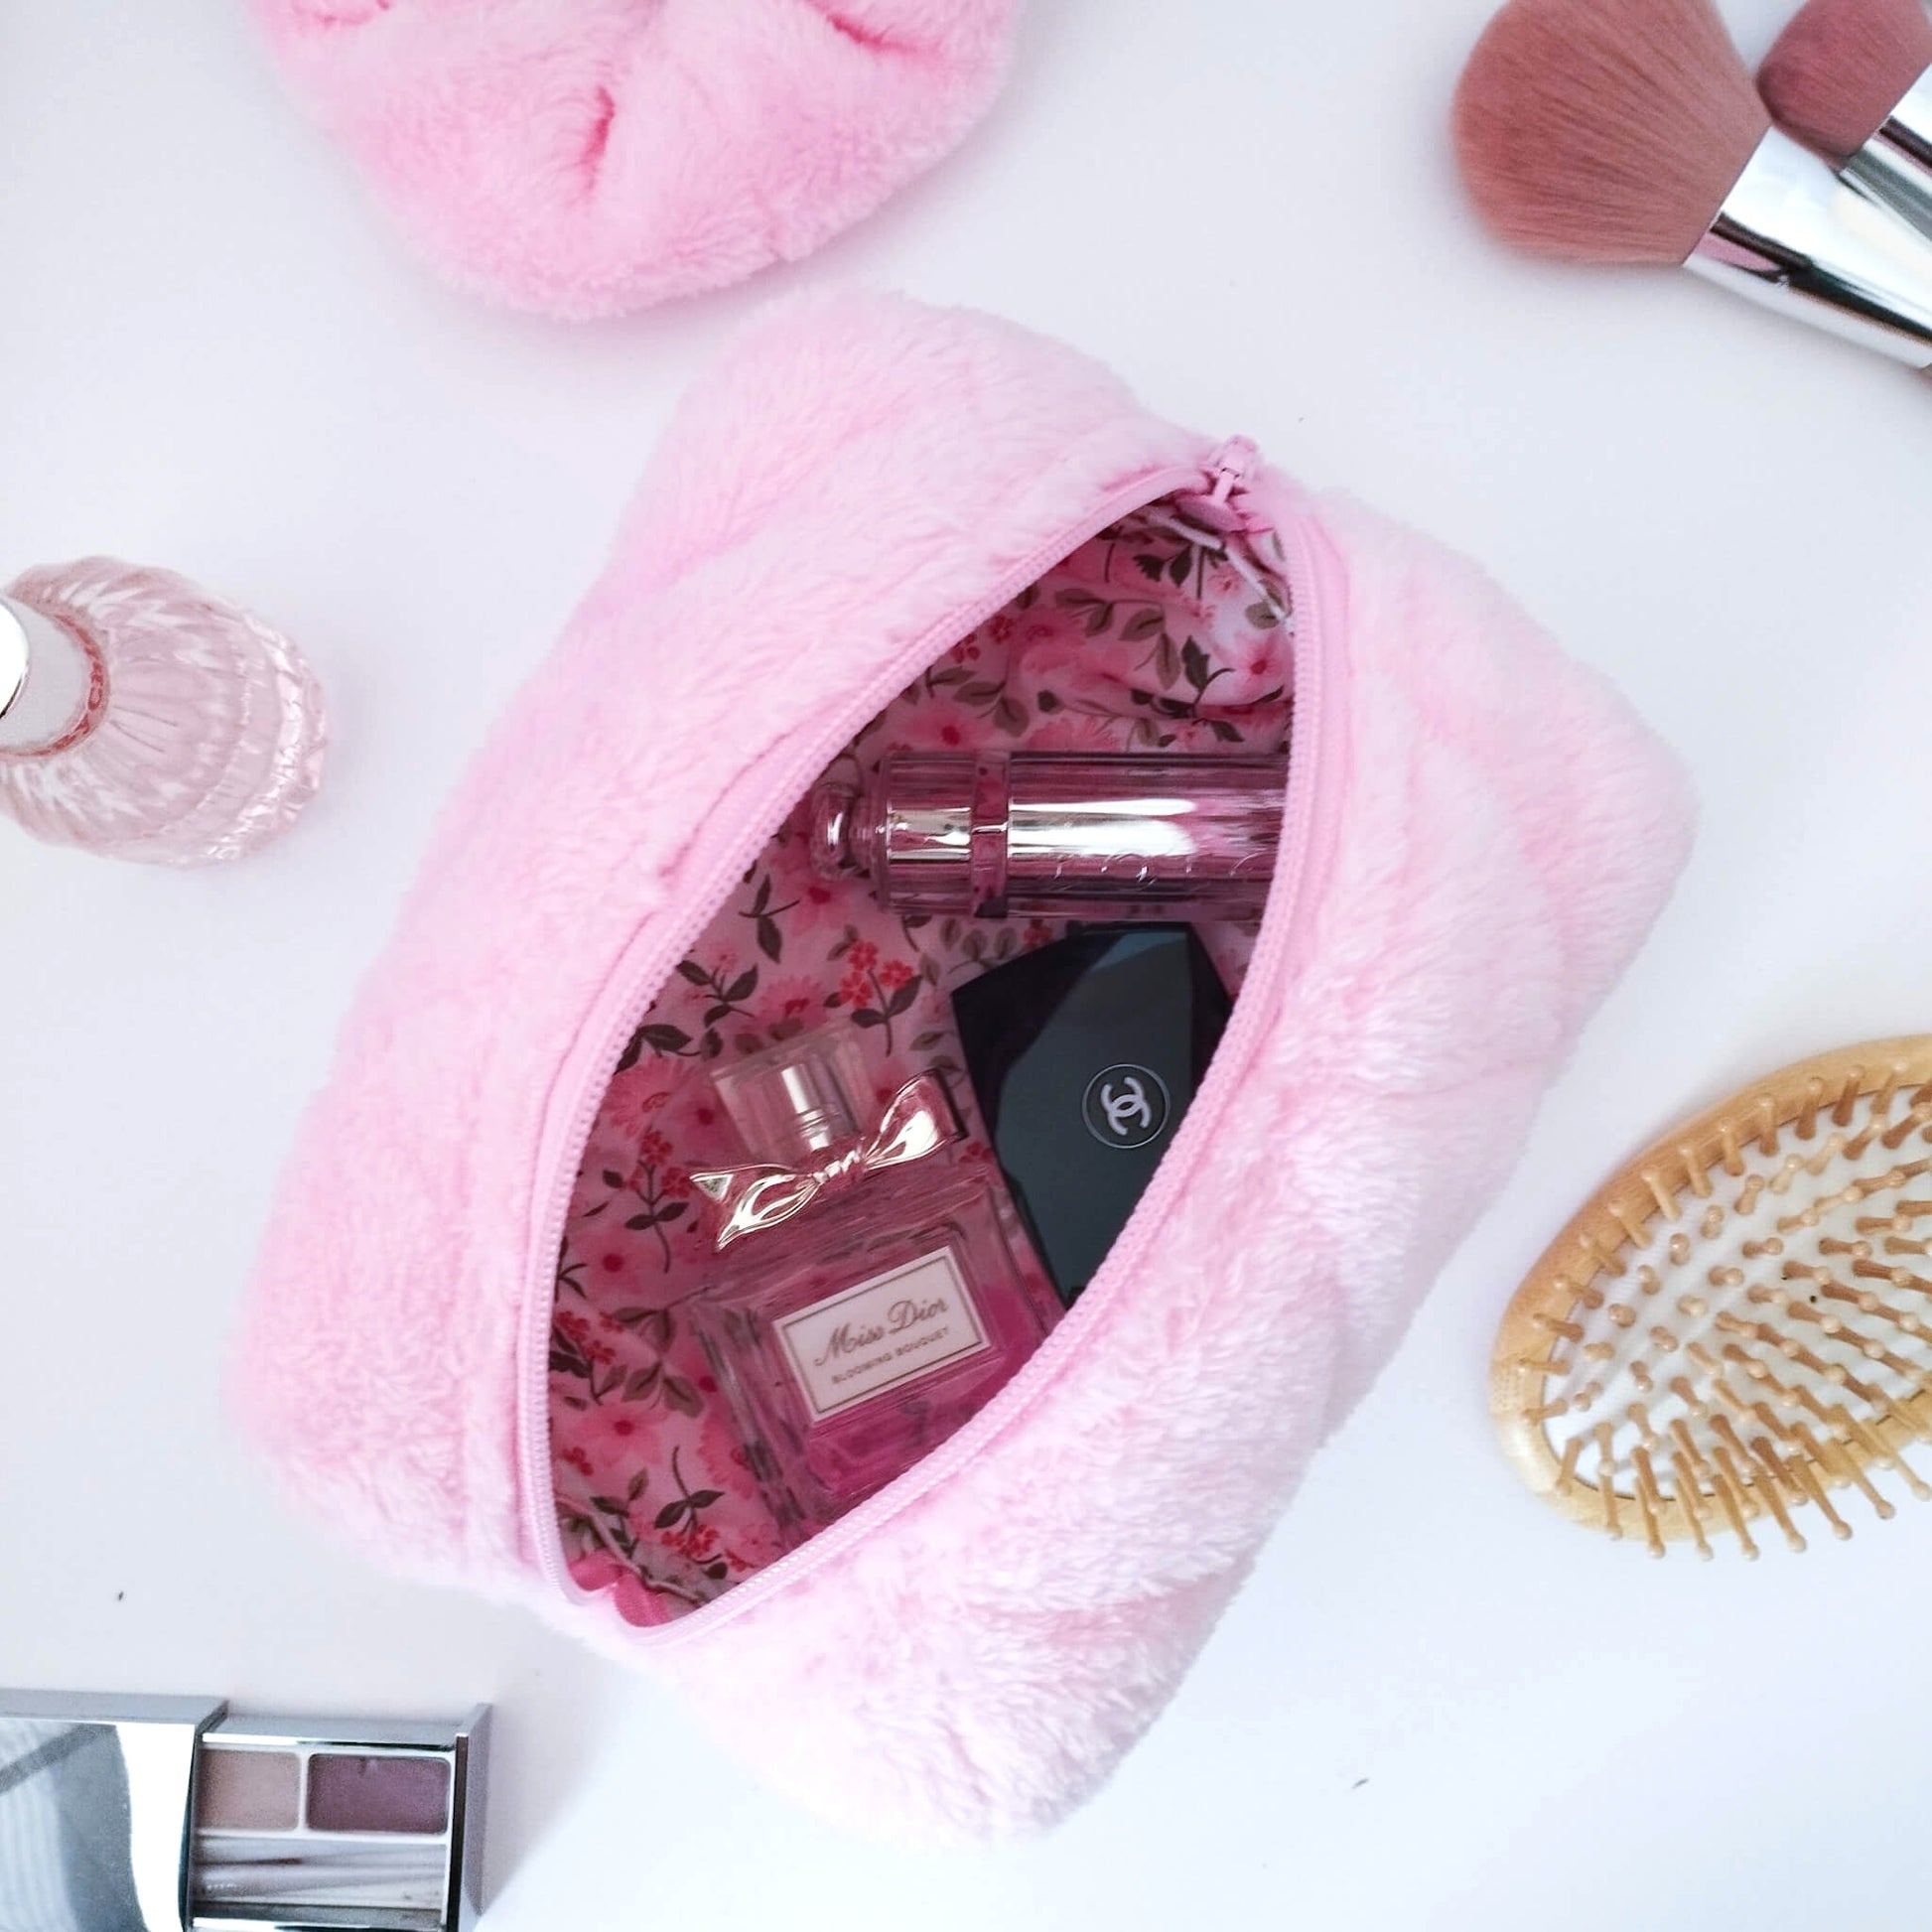 Fyydes Fluffy Makeup Bag Plush Makeup Bag Lovely Soft Plush Fluffy Makeup Bag Fluffy Makeup Bag Portable Cosmetics Bag for Girls Water Pink, Girl's, Size